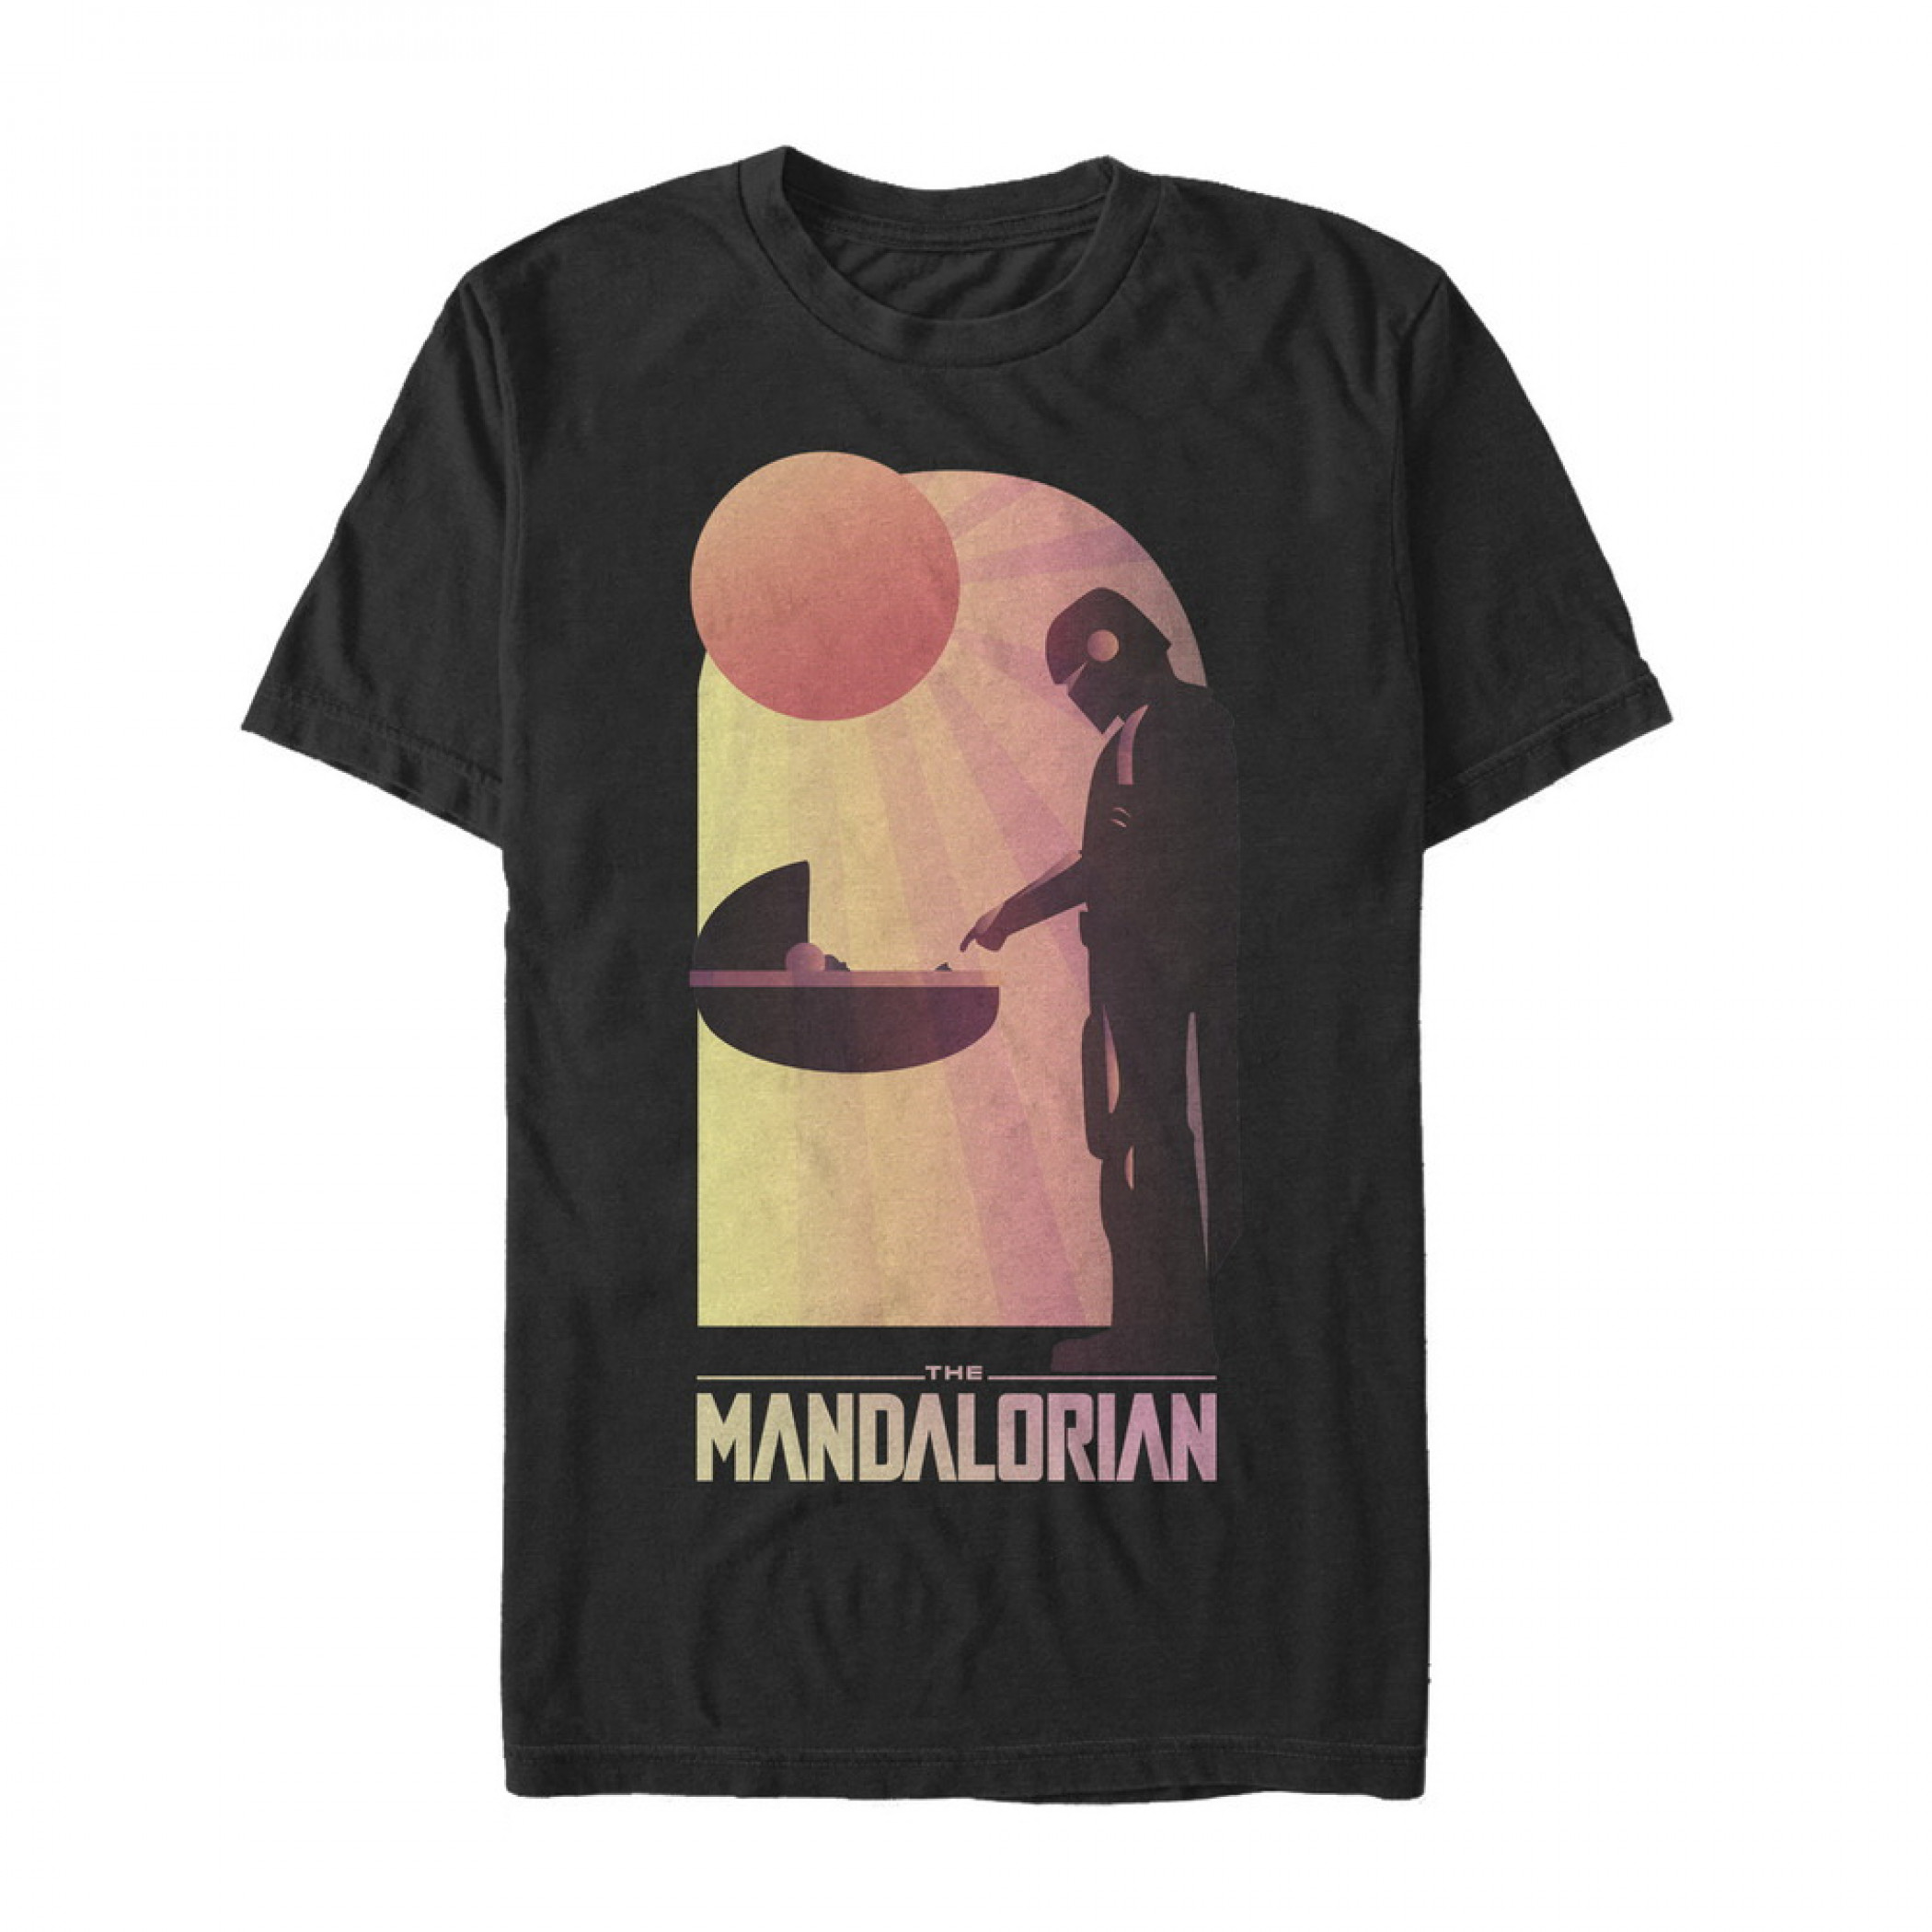 The Mandalorian Meets The Child T-Shirt